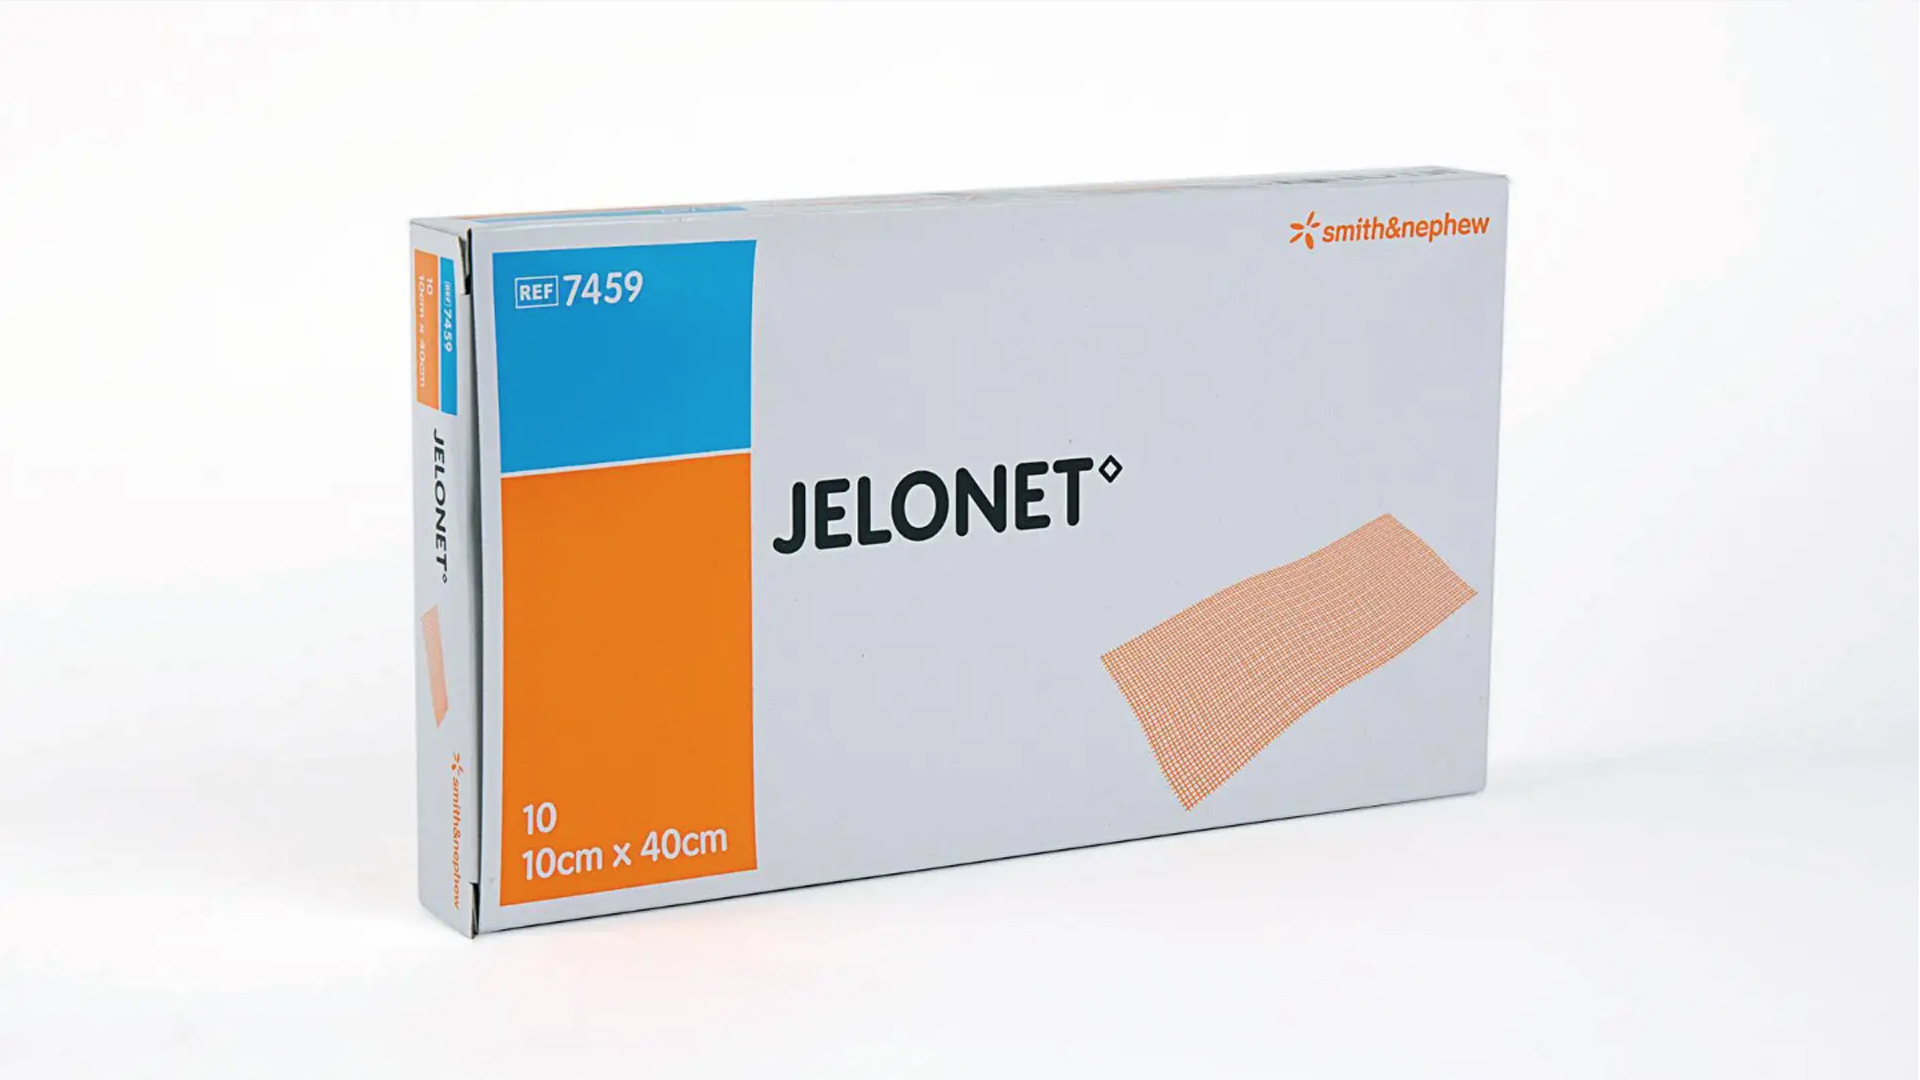 10cm x 40cm - Jelonet Paraffin Gauze Dressing - Pack of 10